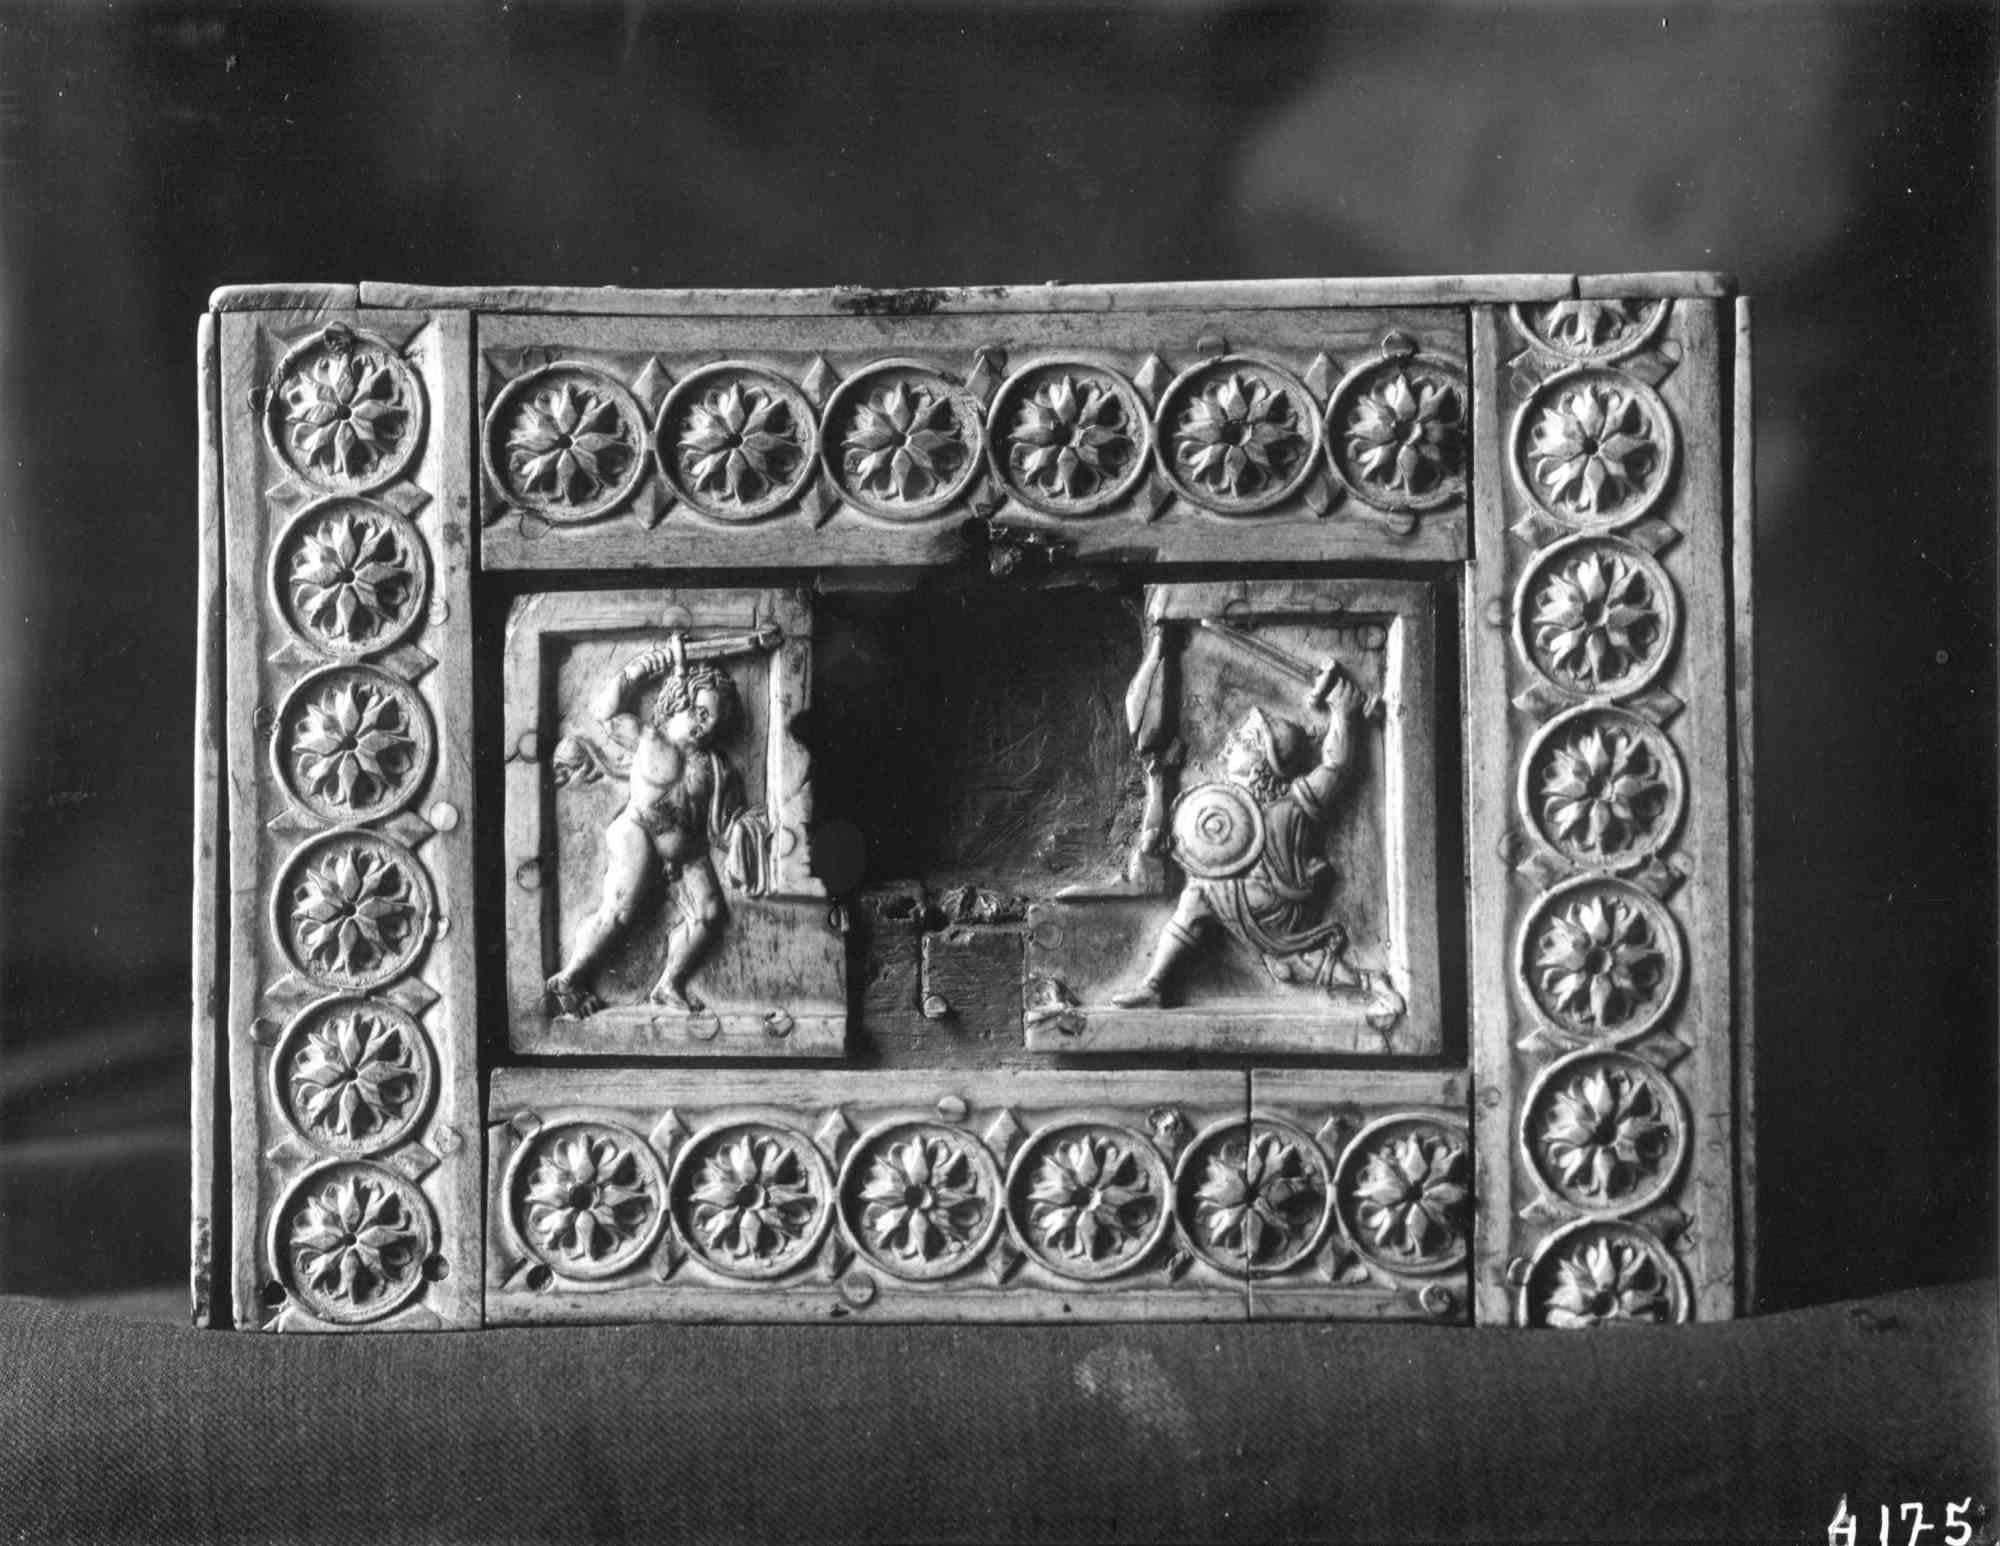 Osvaldo Böhm Figurative Photograph - Byzantine Relief - Vintage Photo Detail by Osvaldo Bohm - Early 20th Century